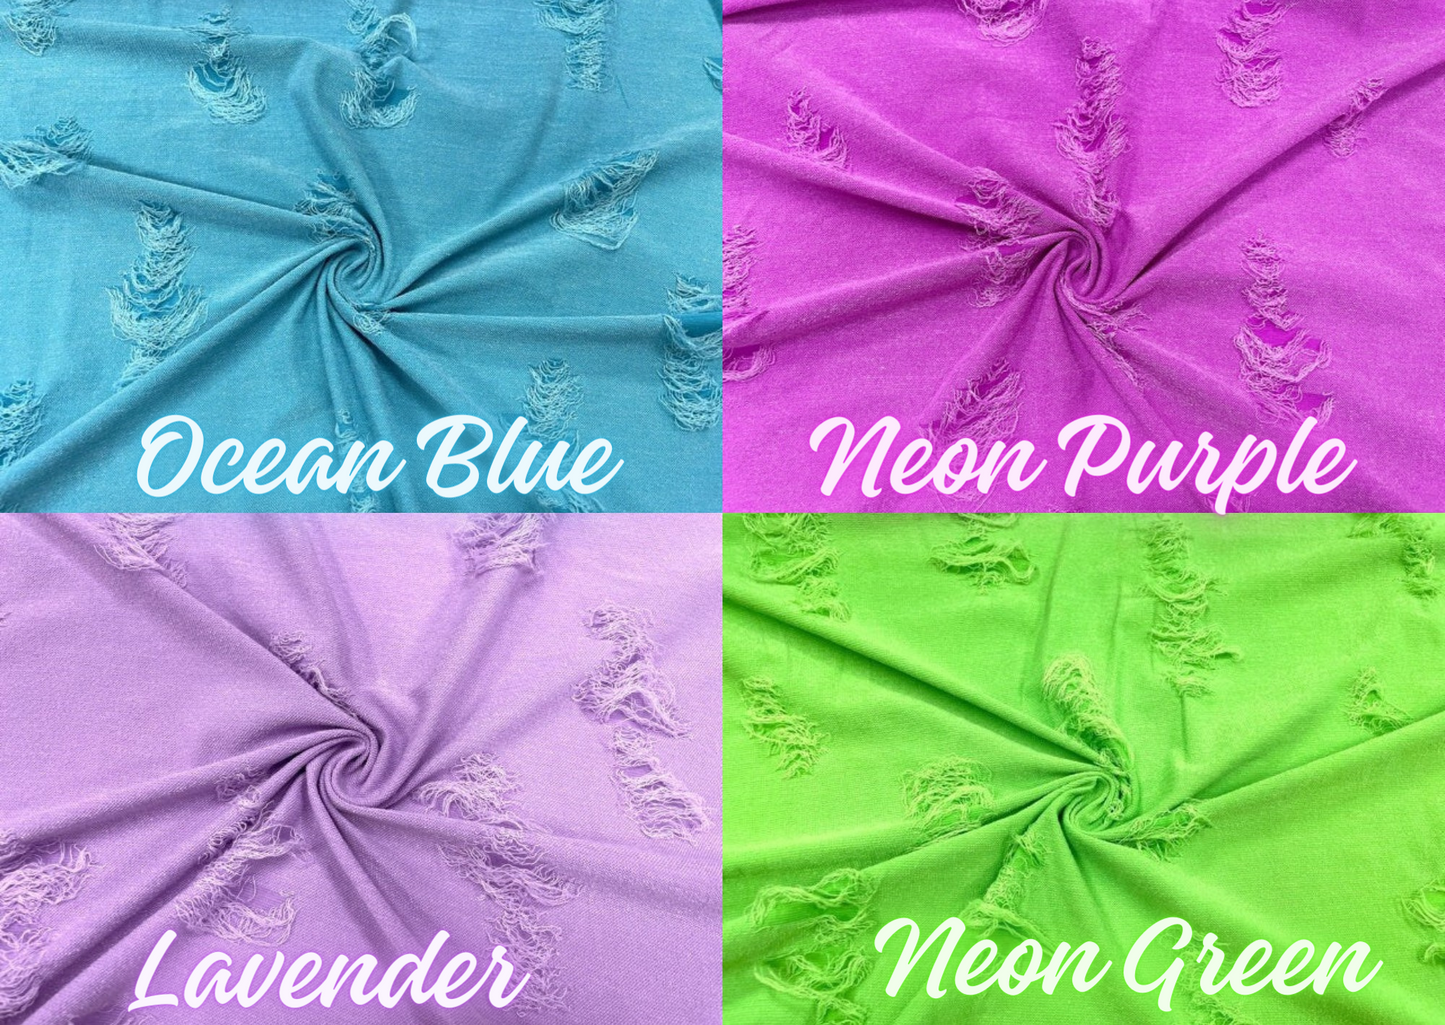 9 PRNTS! Custom 2-in-1 Crop Top | Distressed Fabrics, Blue, Purple, Green, Black, Piink